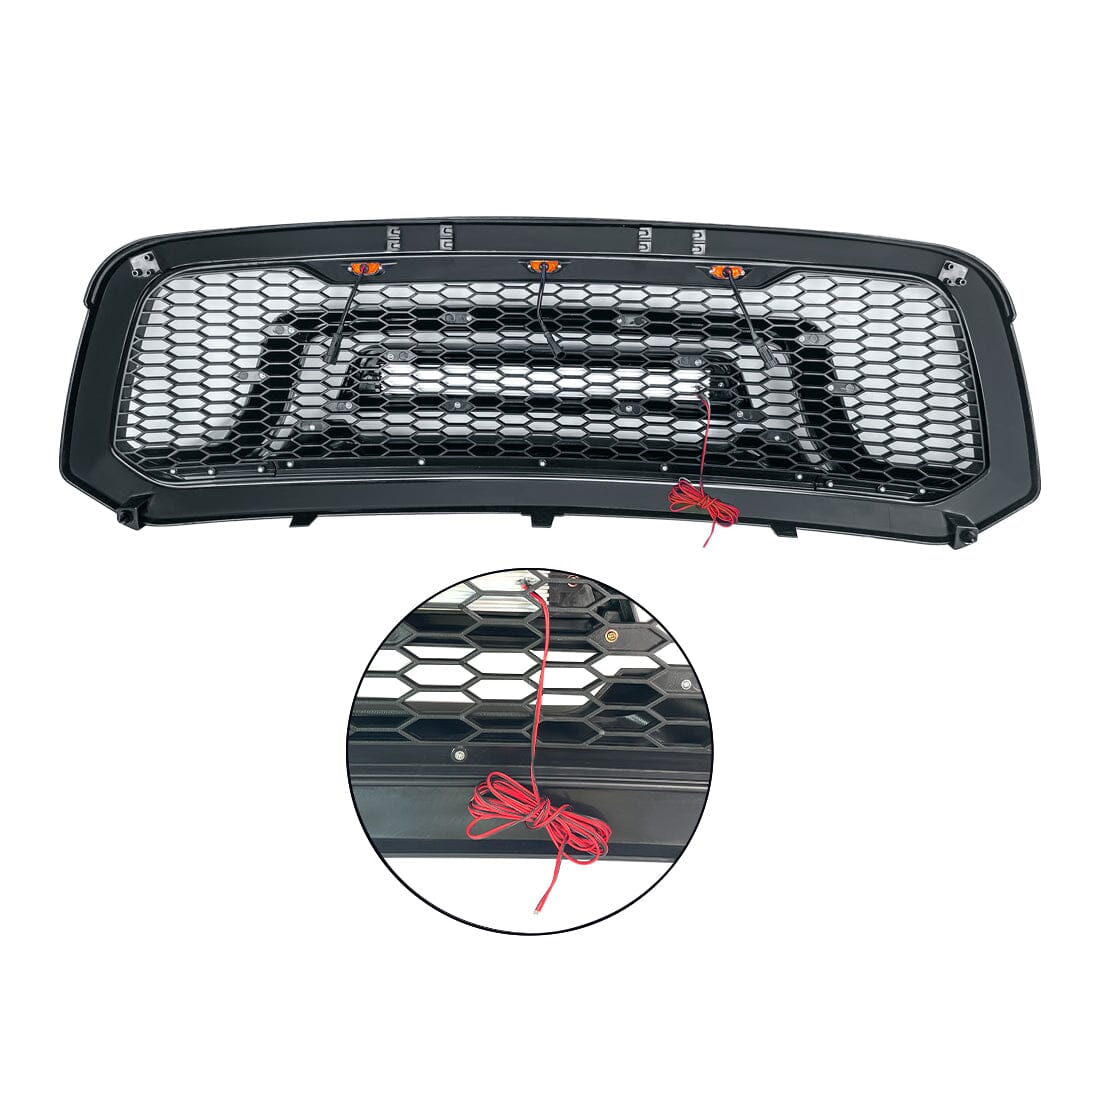 Armor Grille w/Off-Road Lights For 2013-2018 Dodge Ram 1500